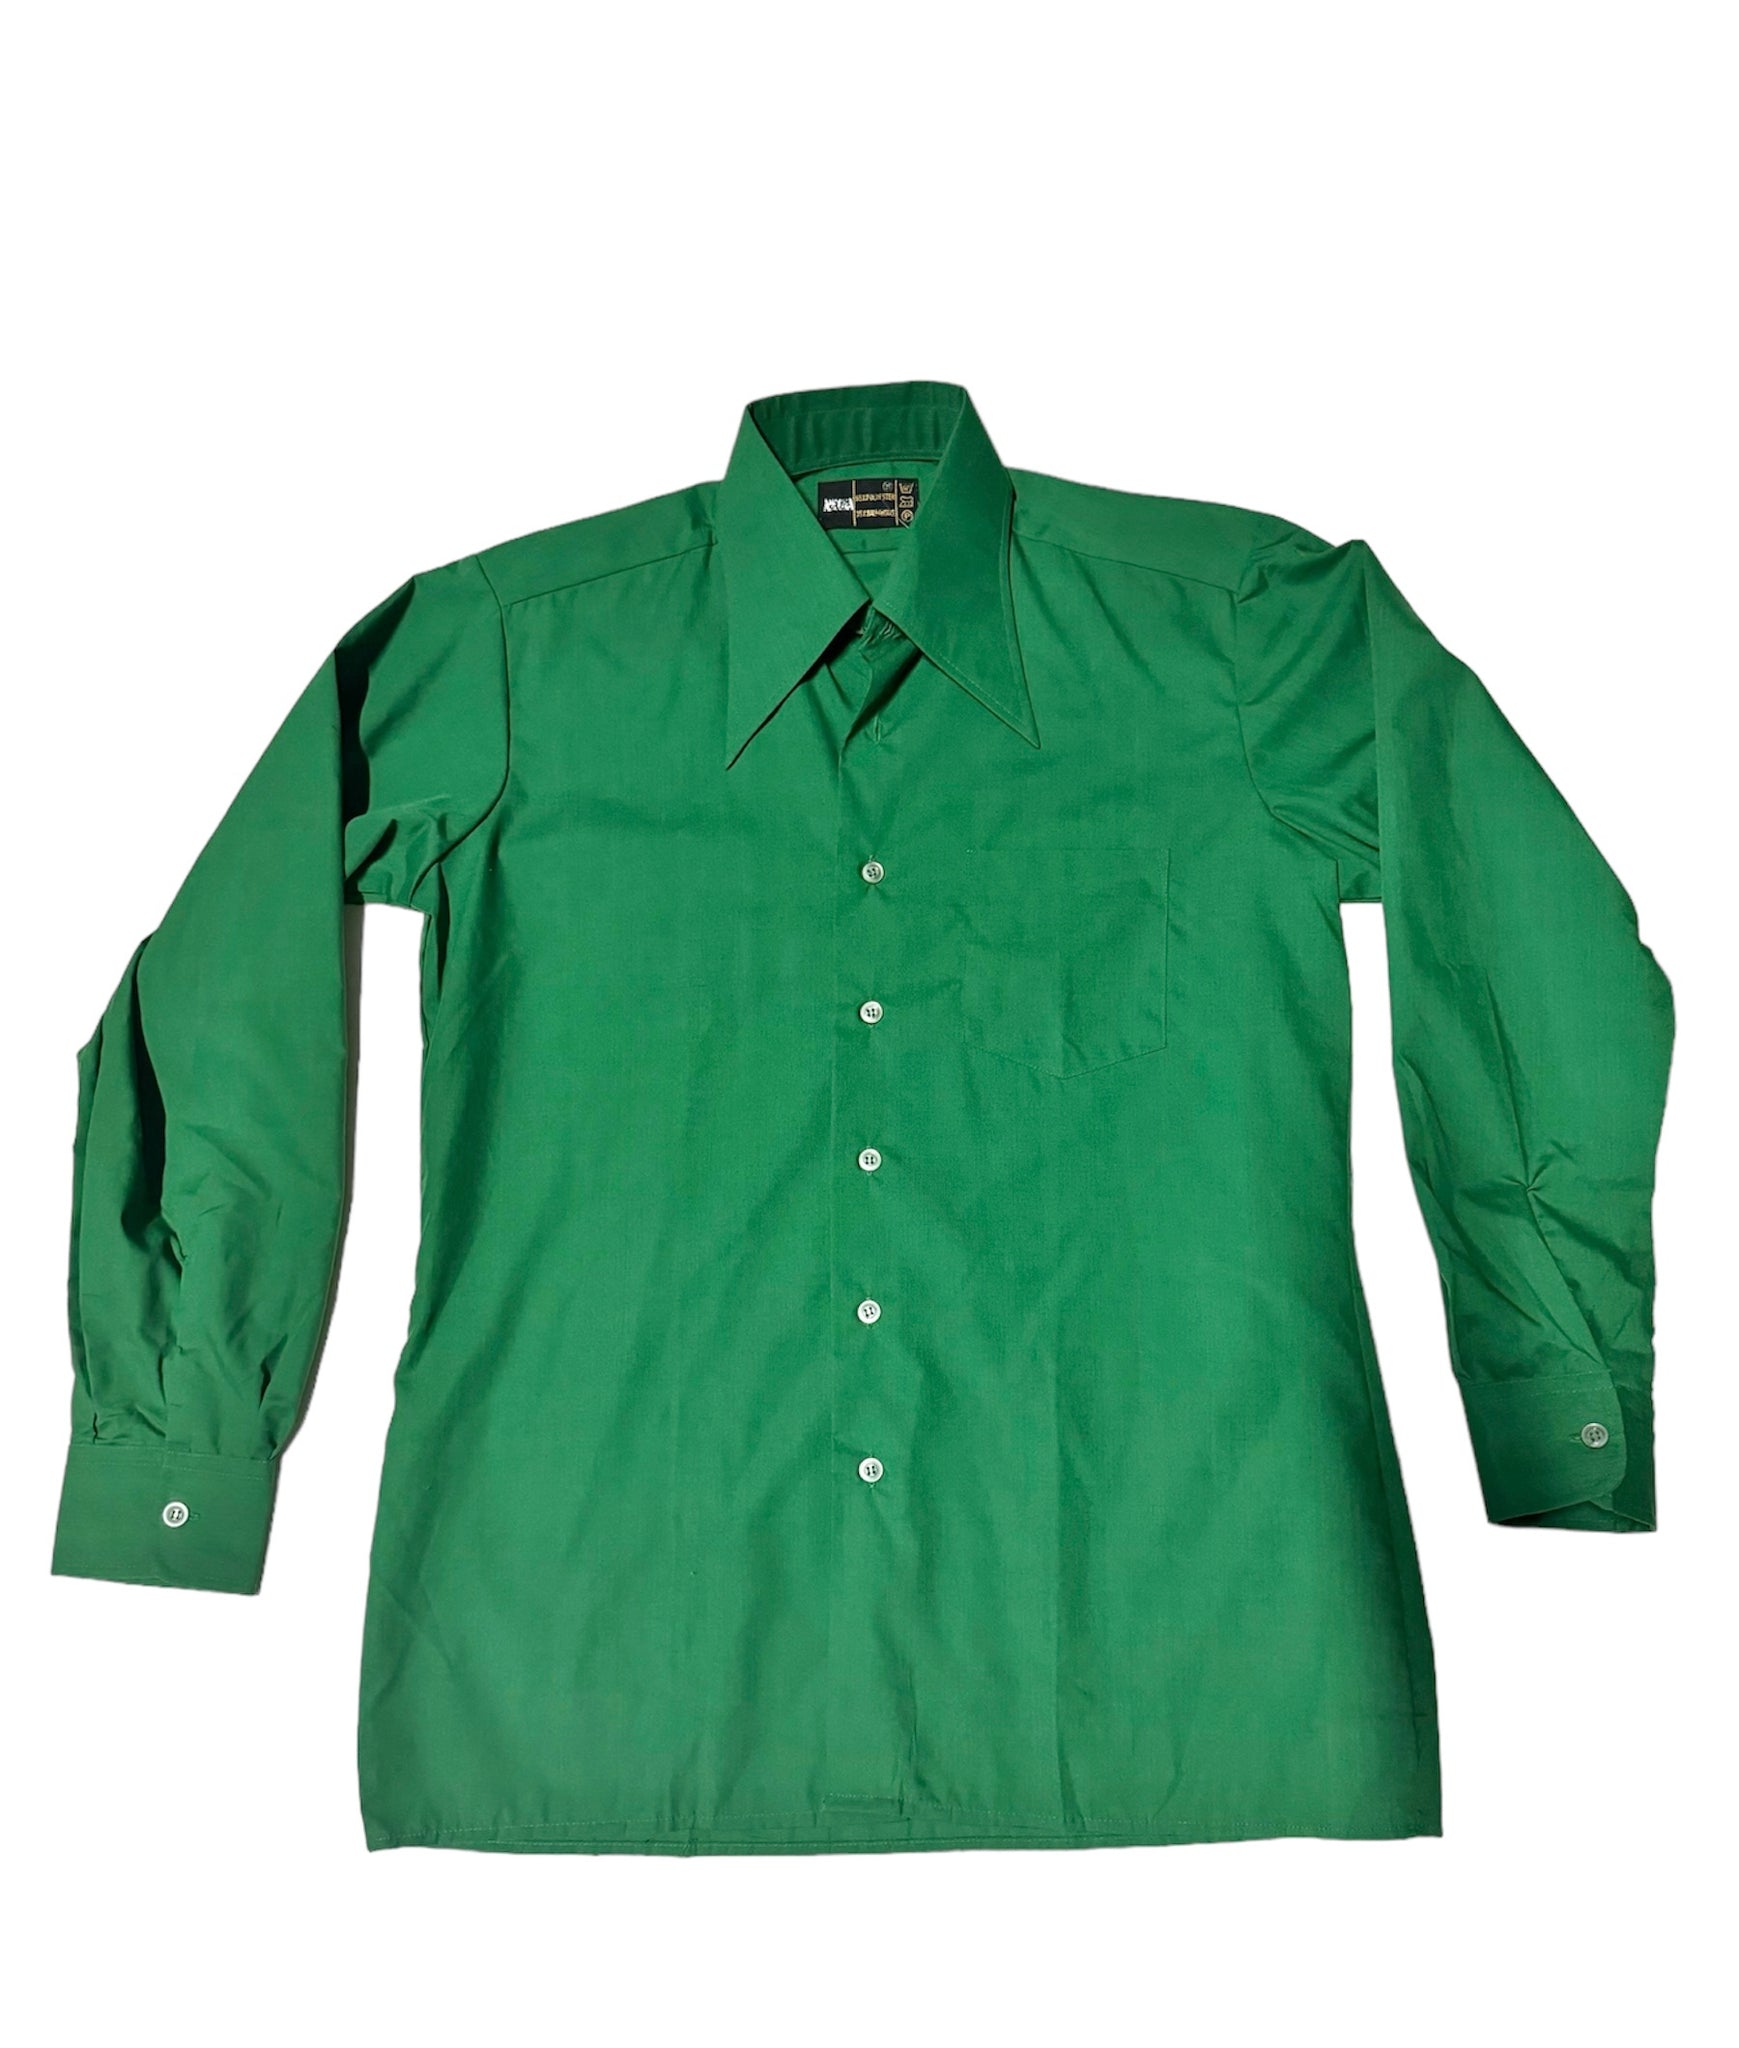 Vintage Green 70s Shirt (M)